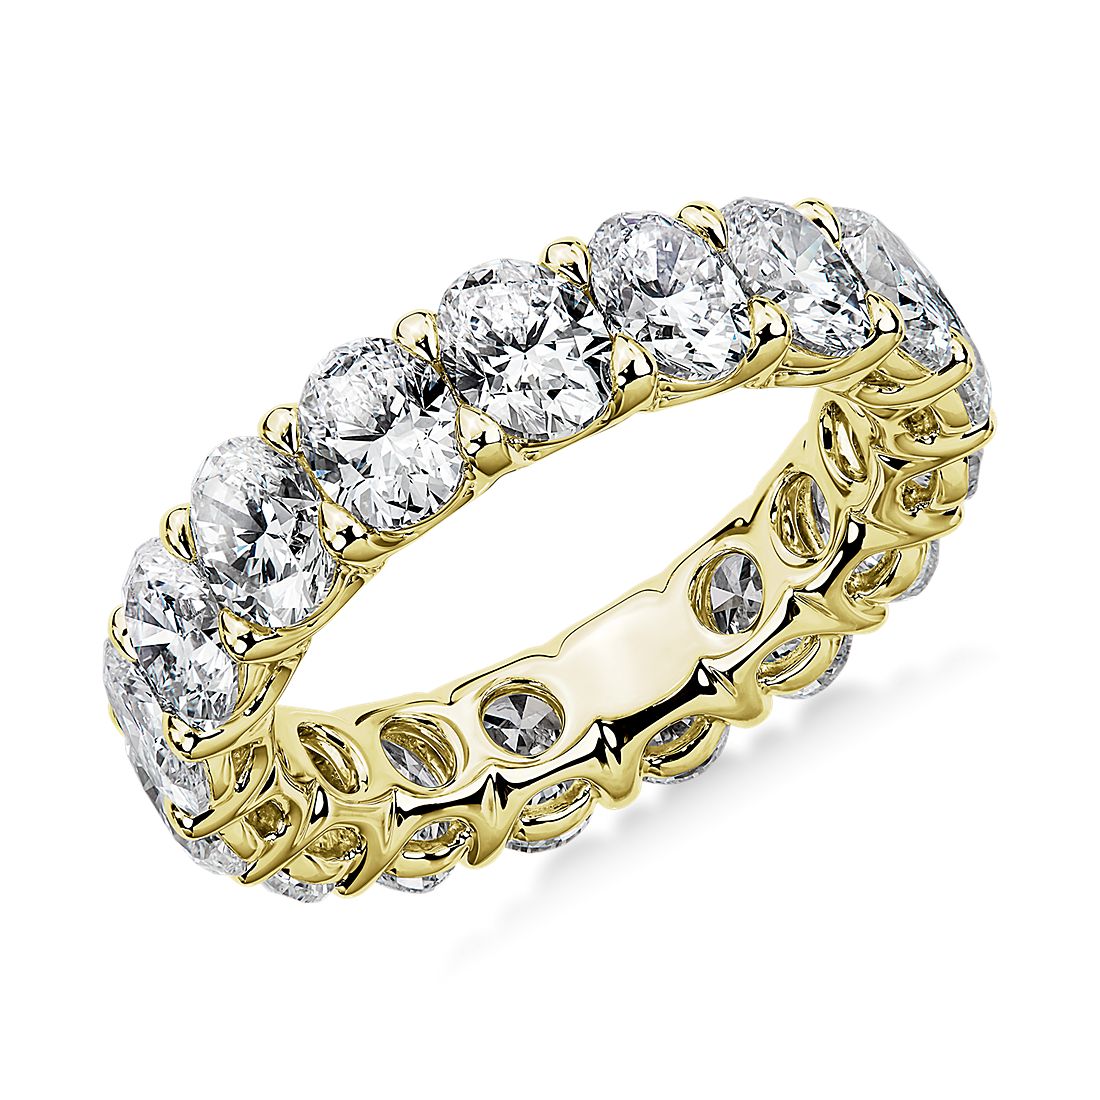 Regal Oval-Cut Diamond Eternity Ring in 18k Yellow Gold - G/SI1 (5 ct. tw.)